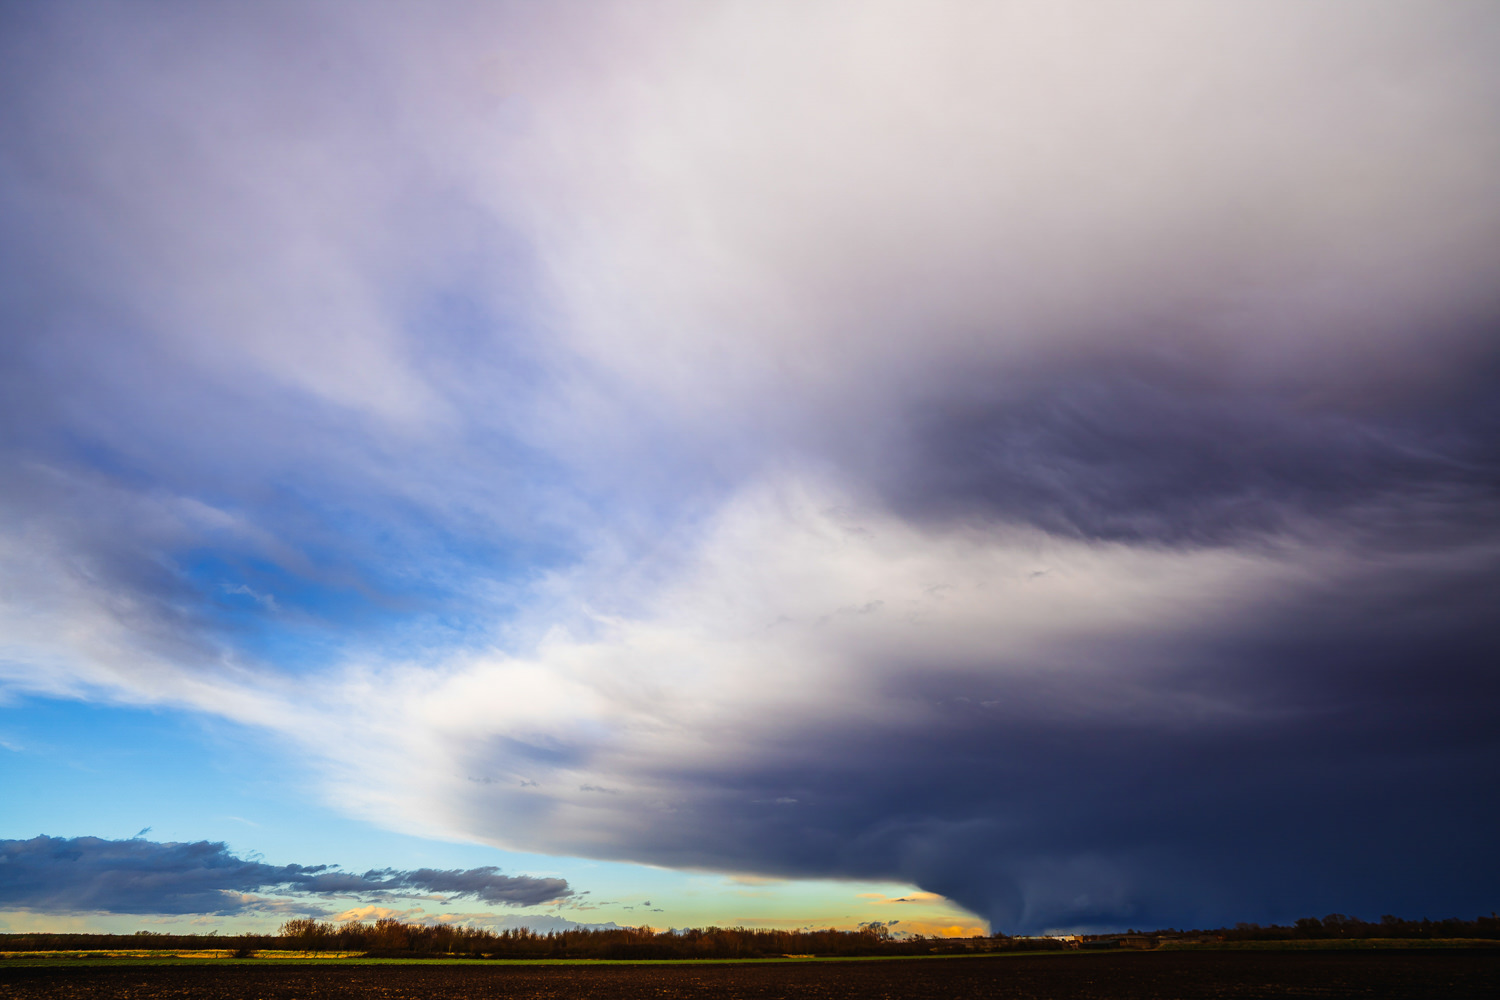 A field and a massive storm cloud